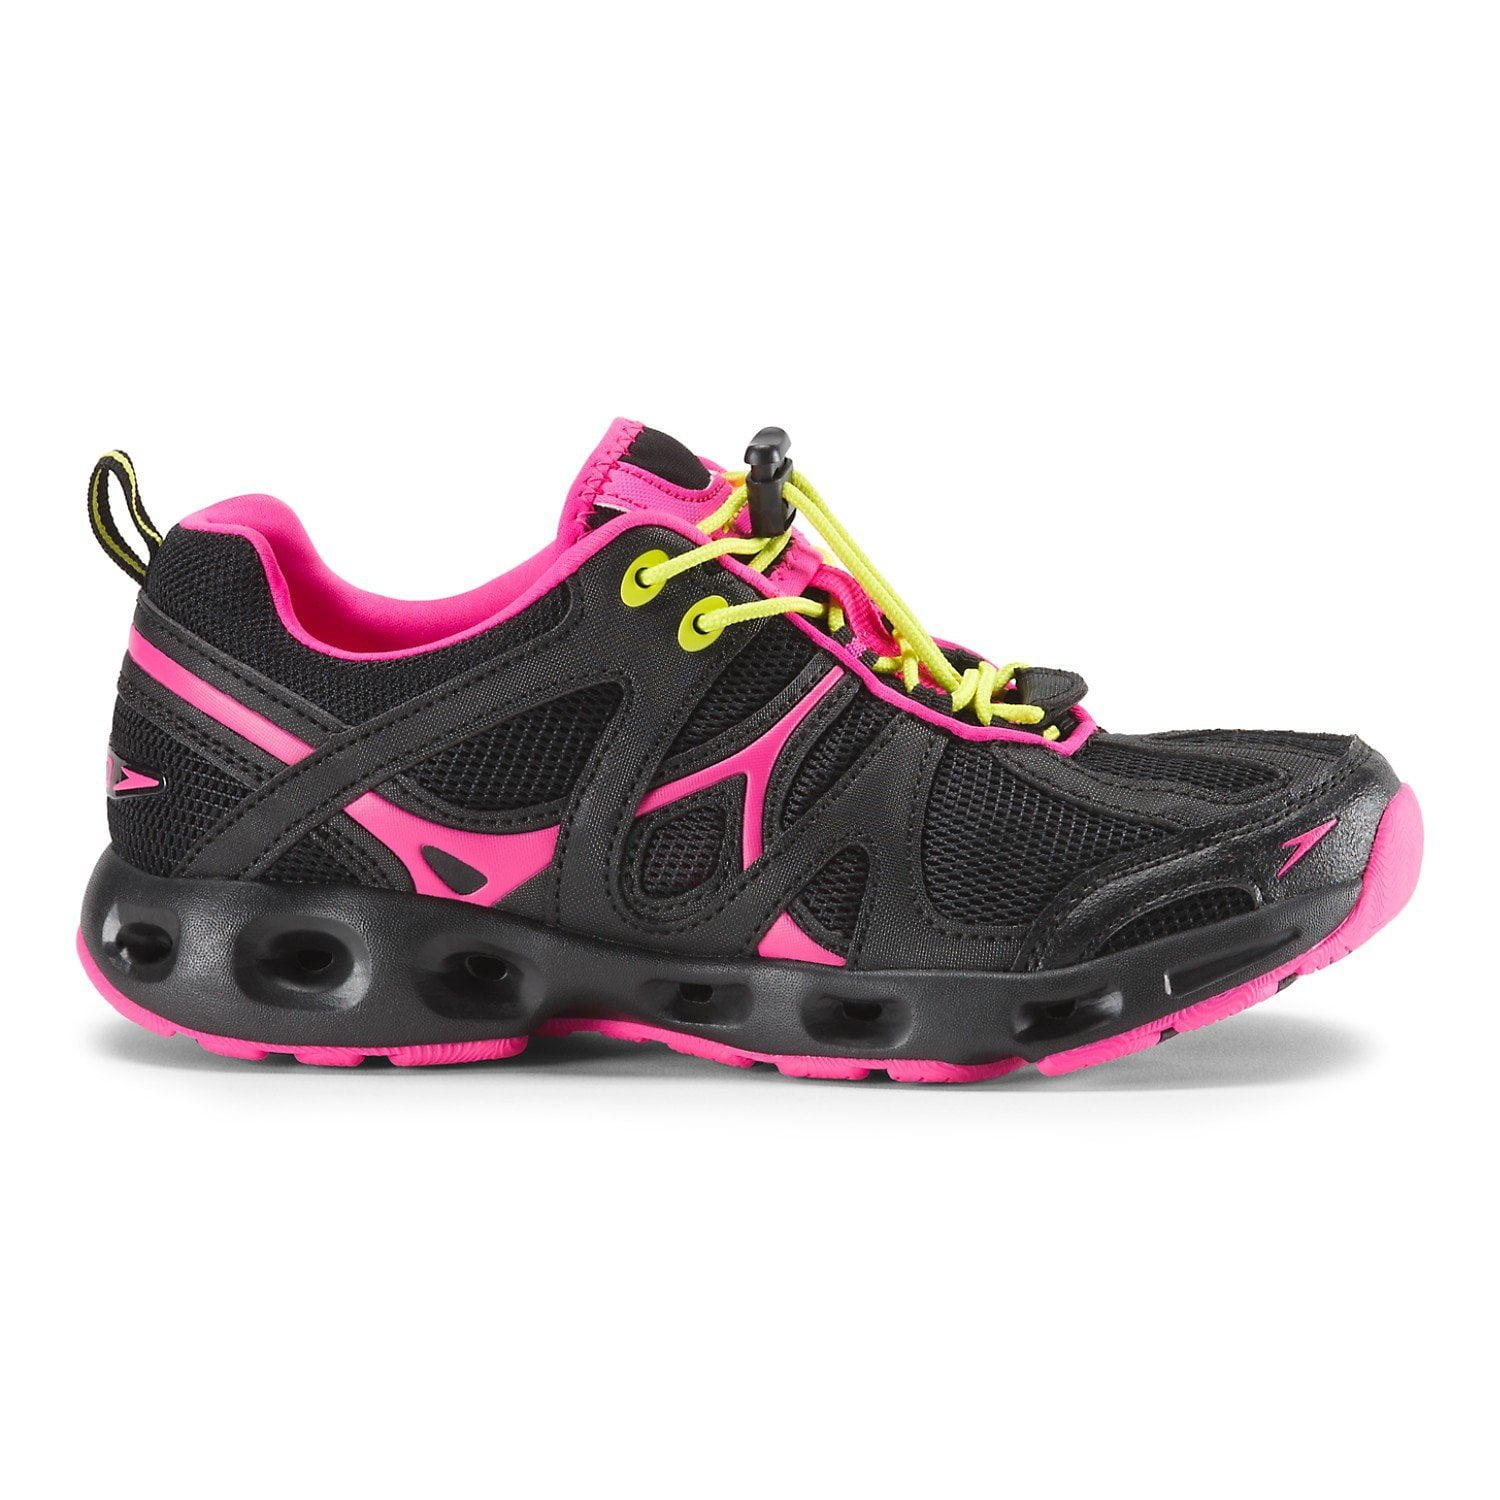 speedo women's hydro comfort 4. water shoe